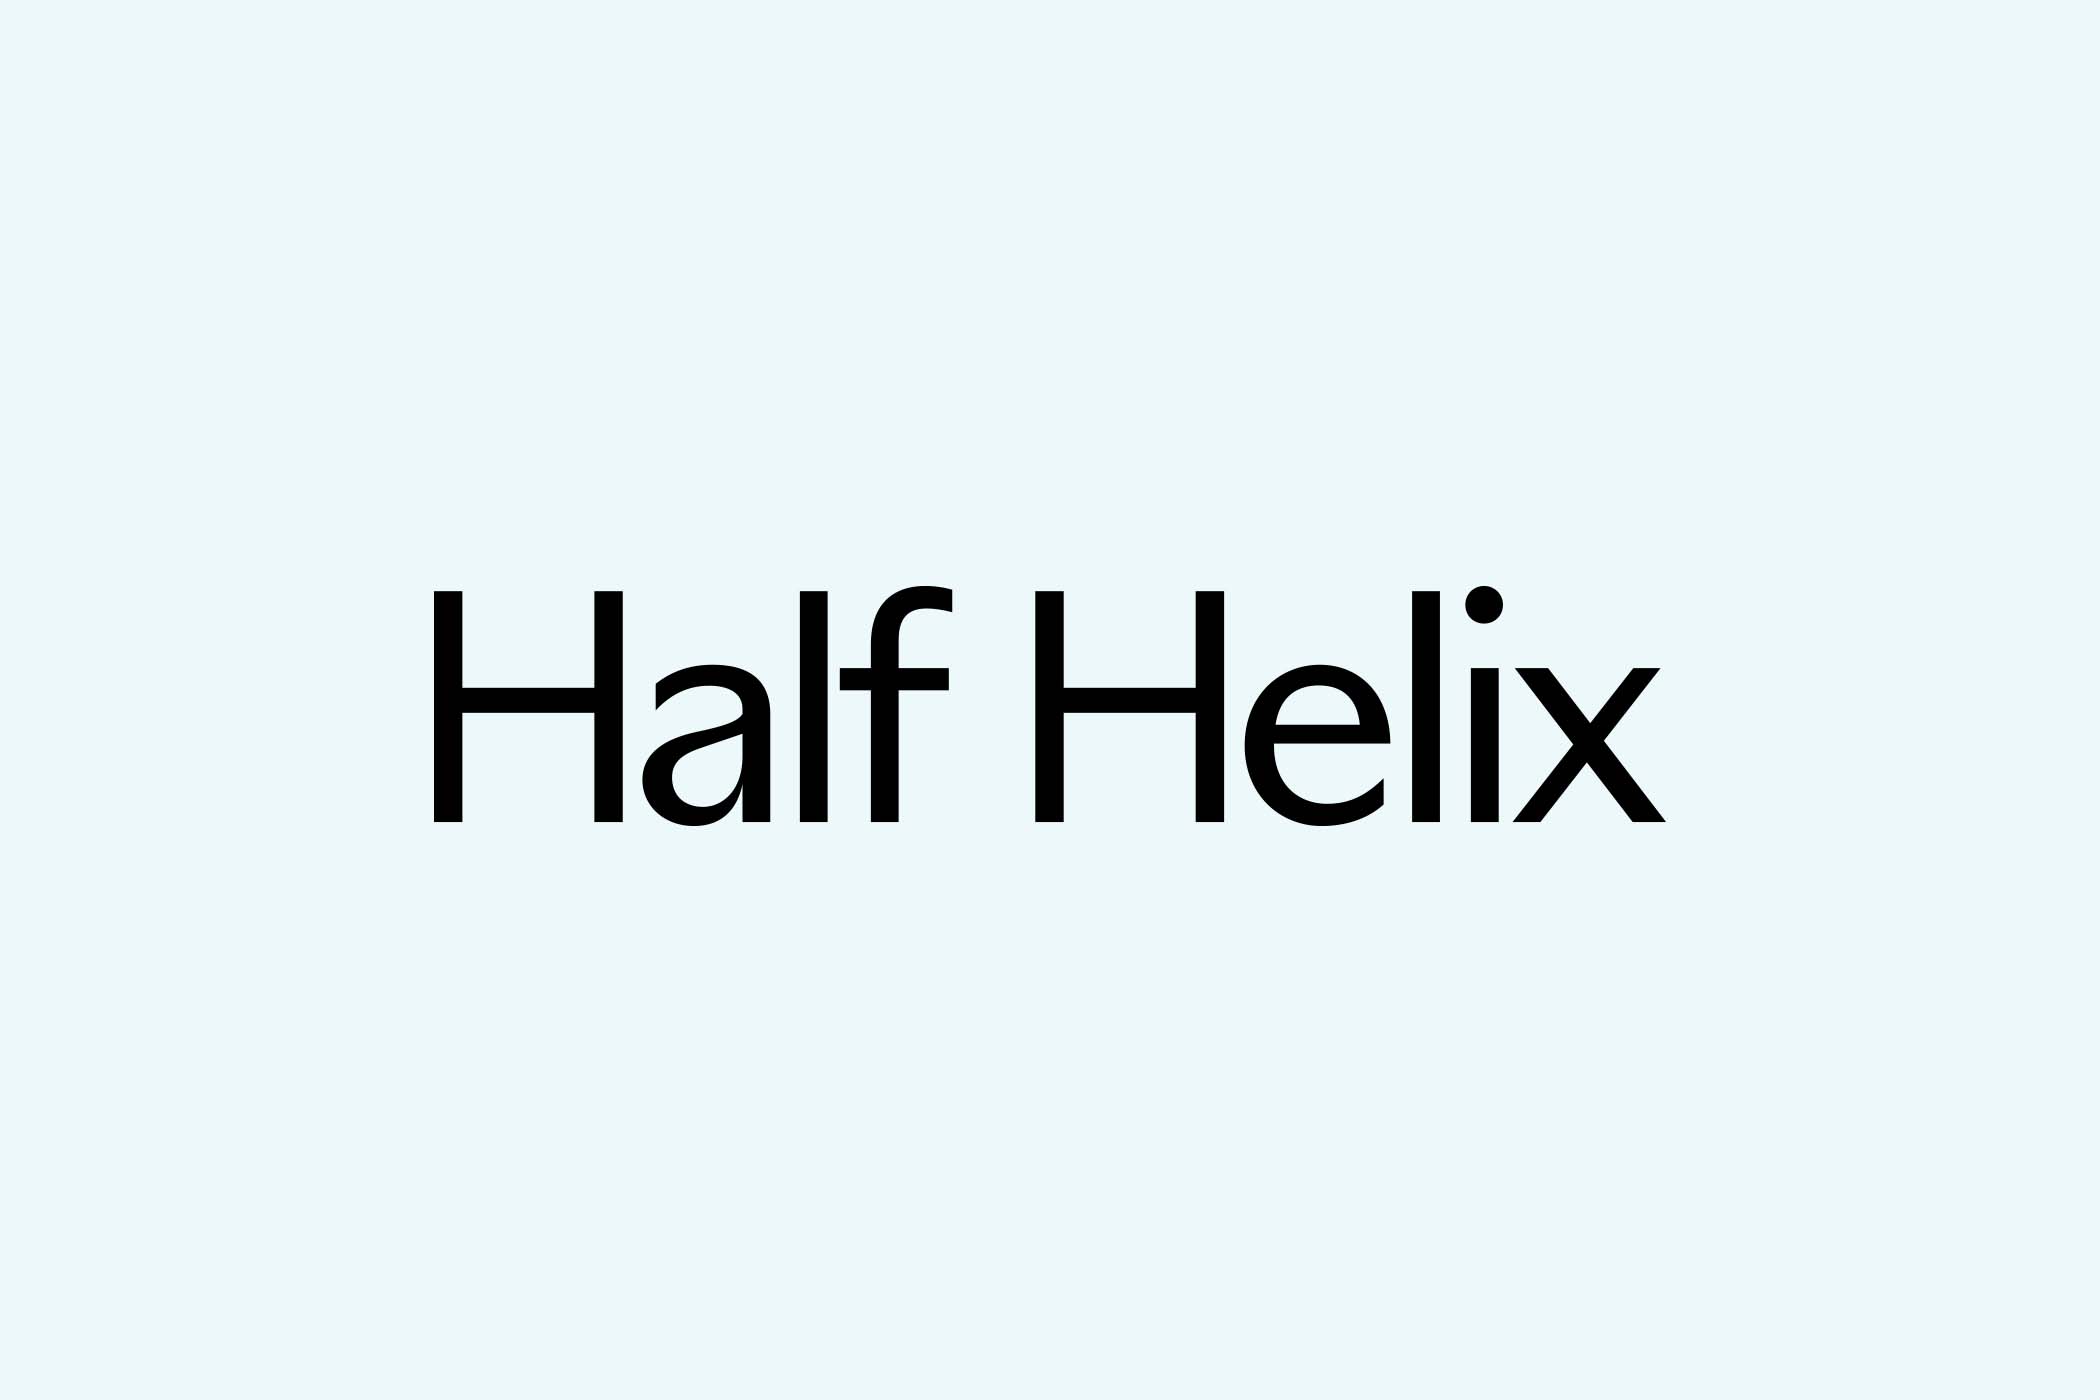 HalfHelix